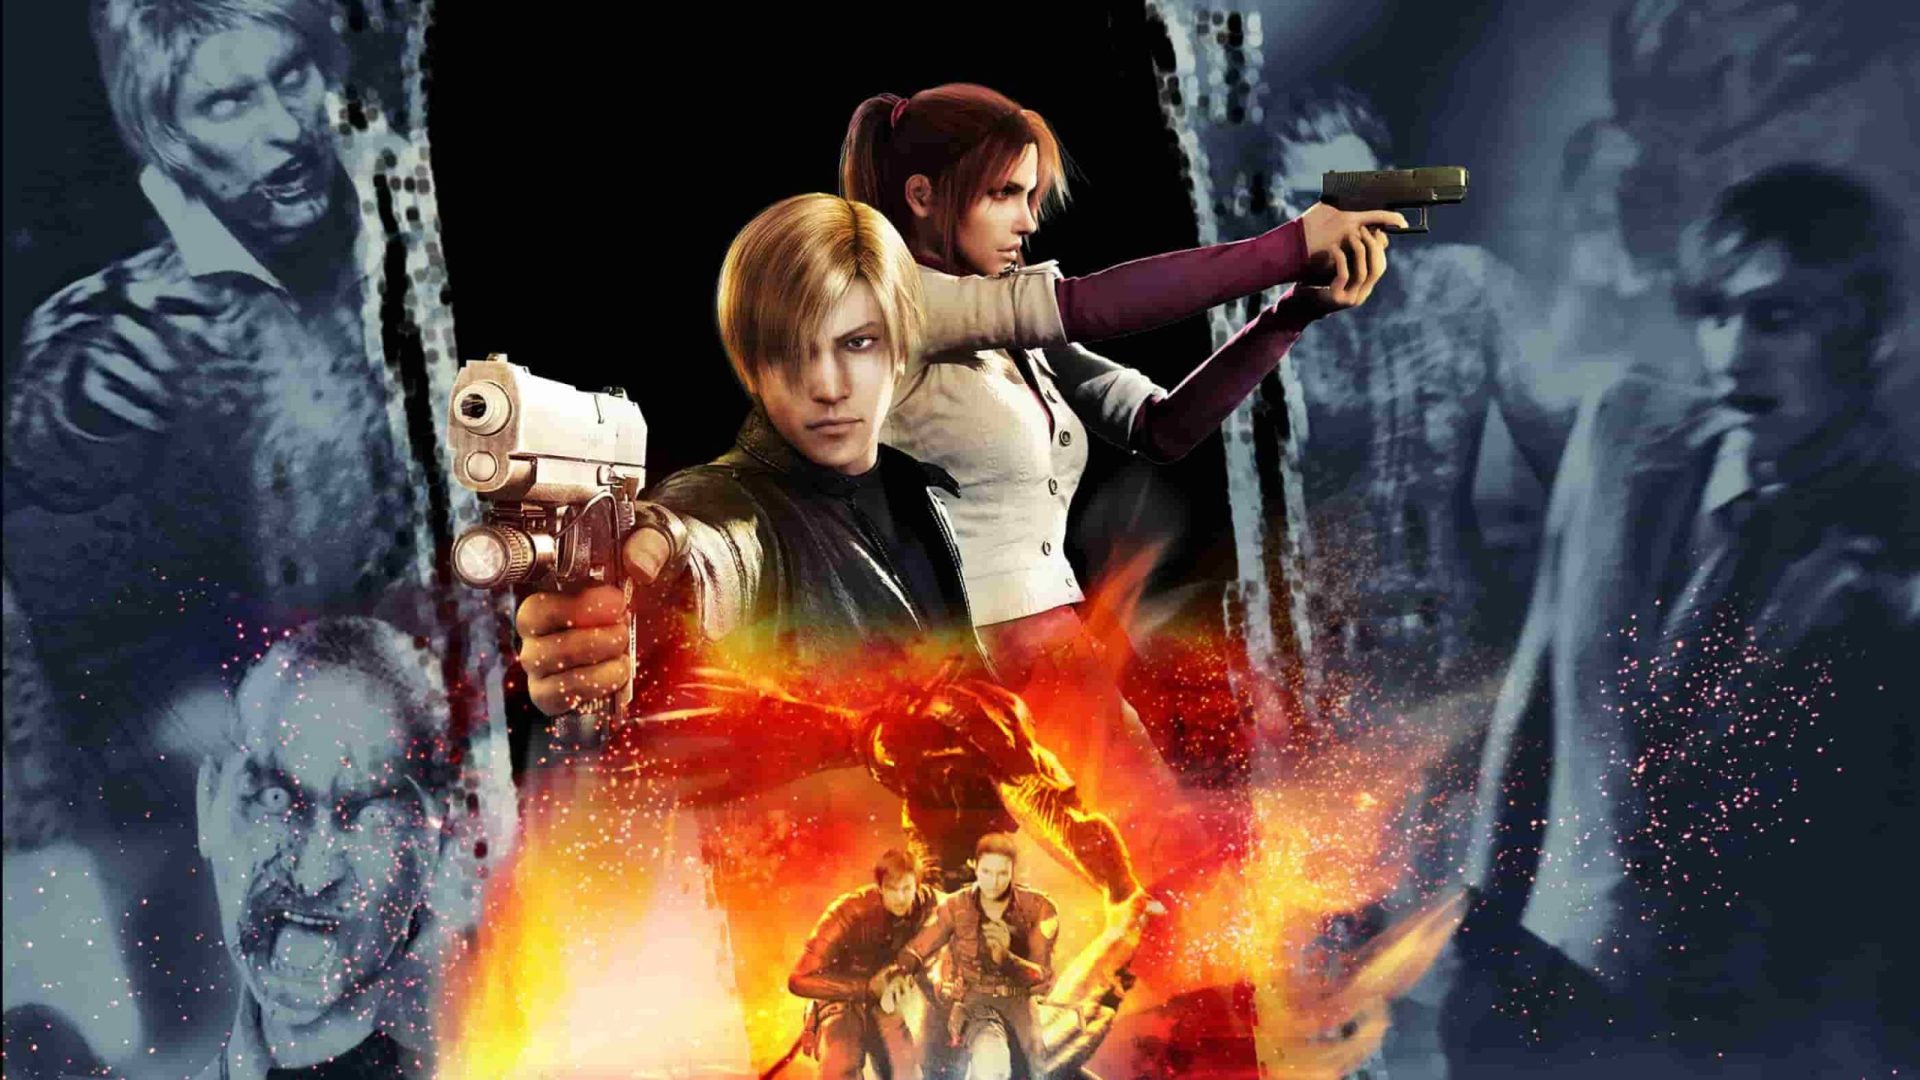 دانلود انیمیشن Resident Evil: Degeneration 2008